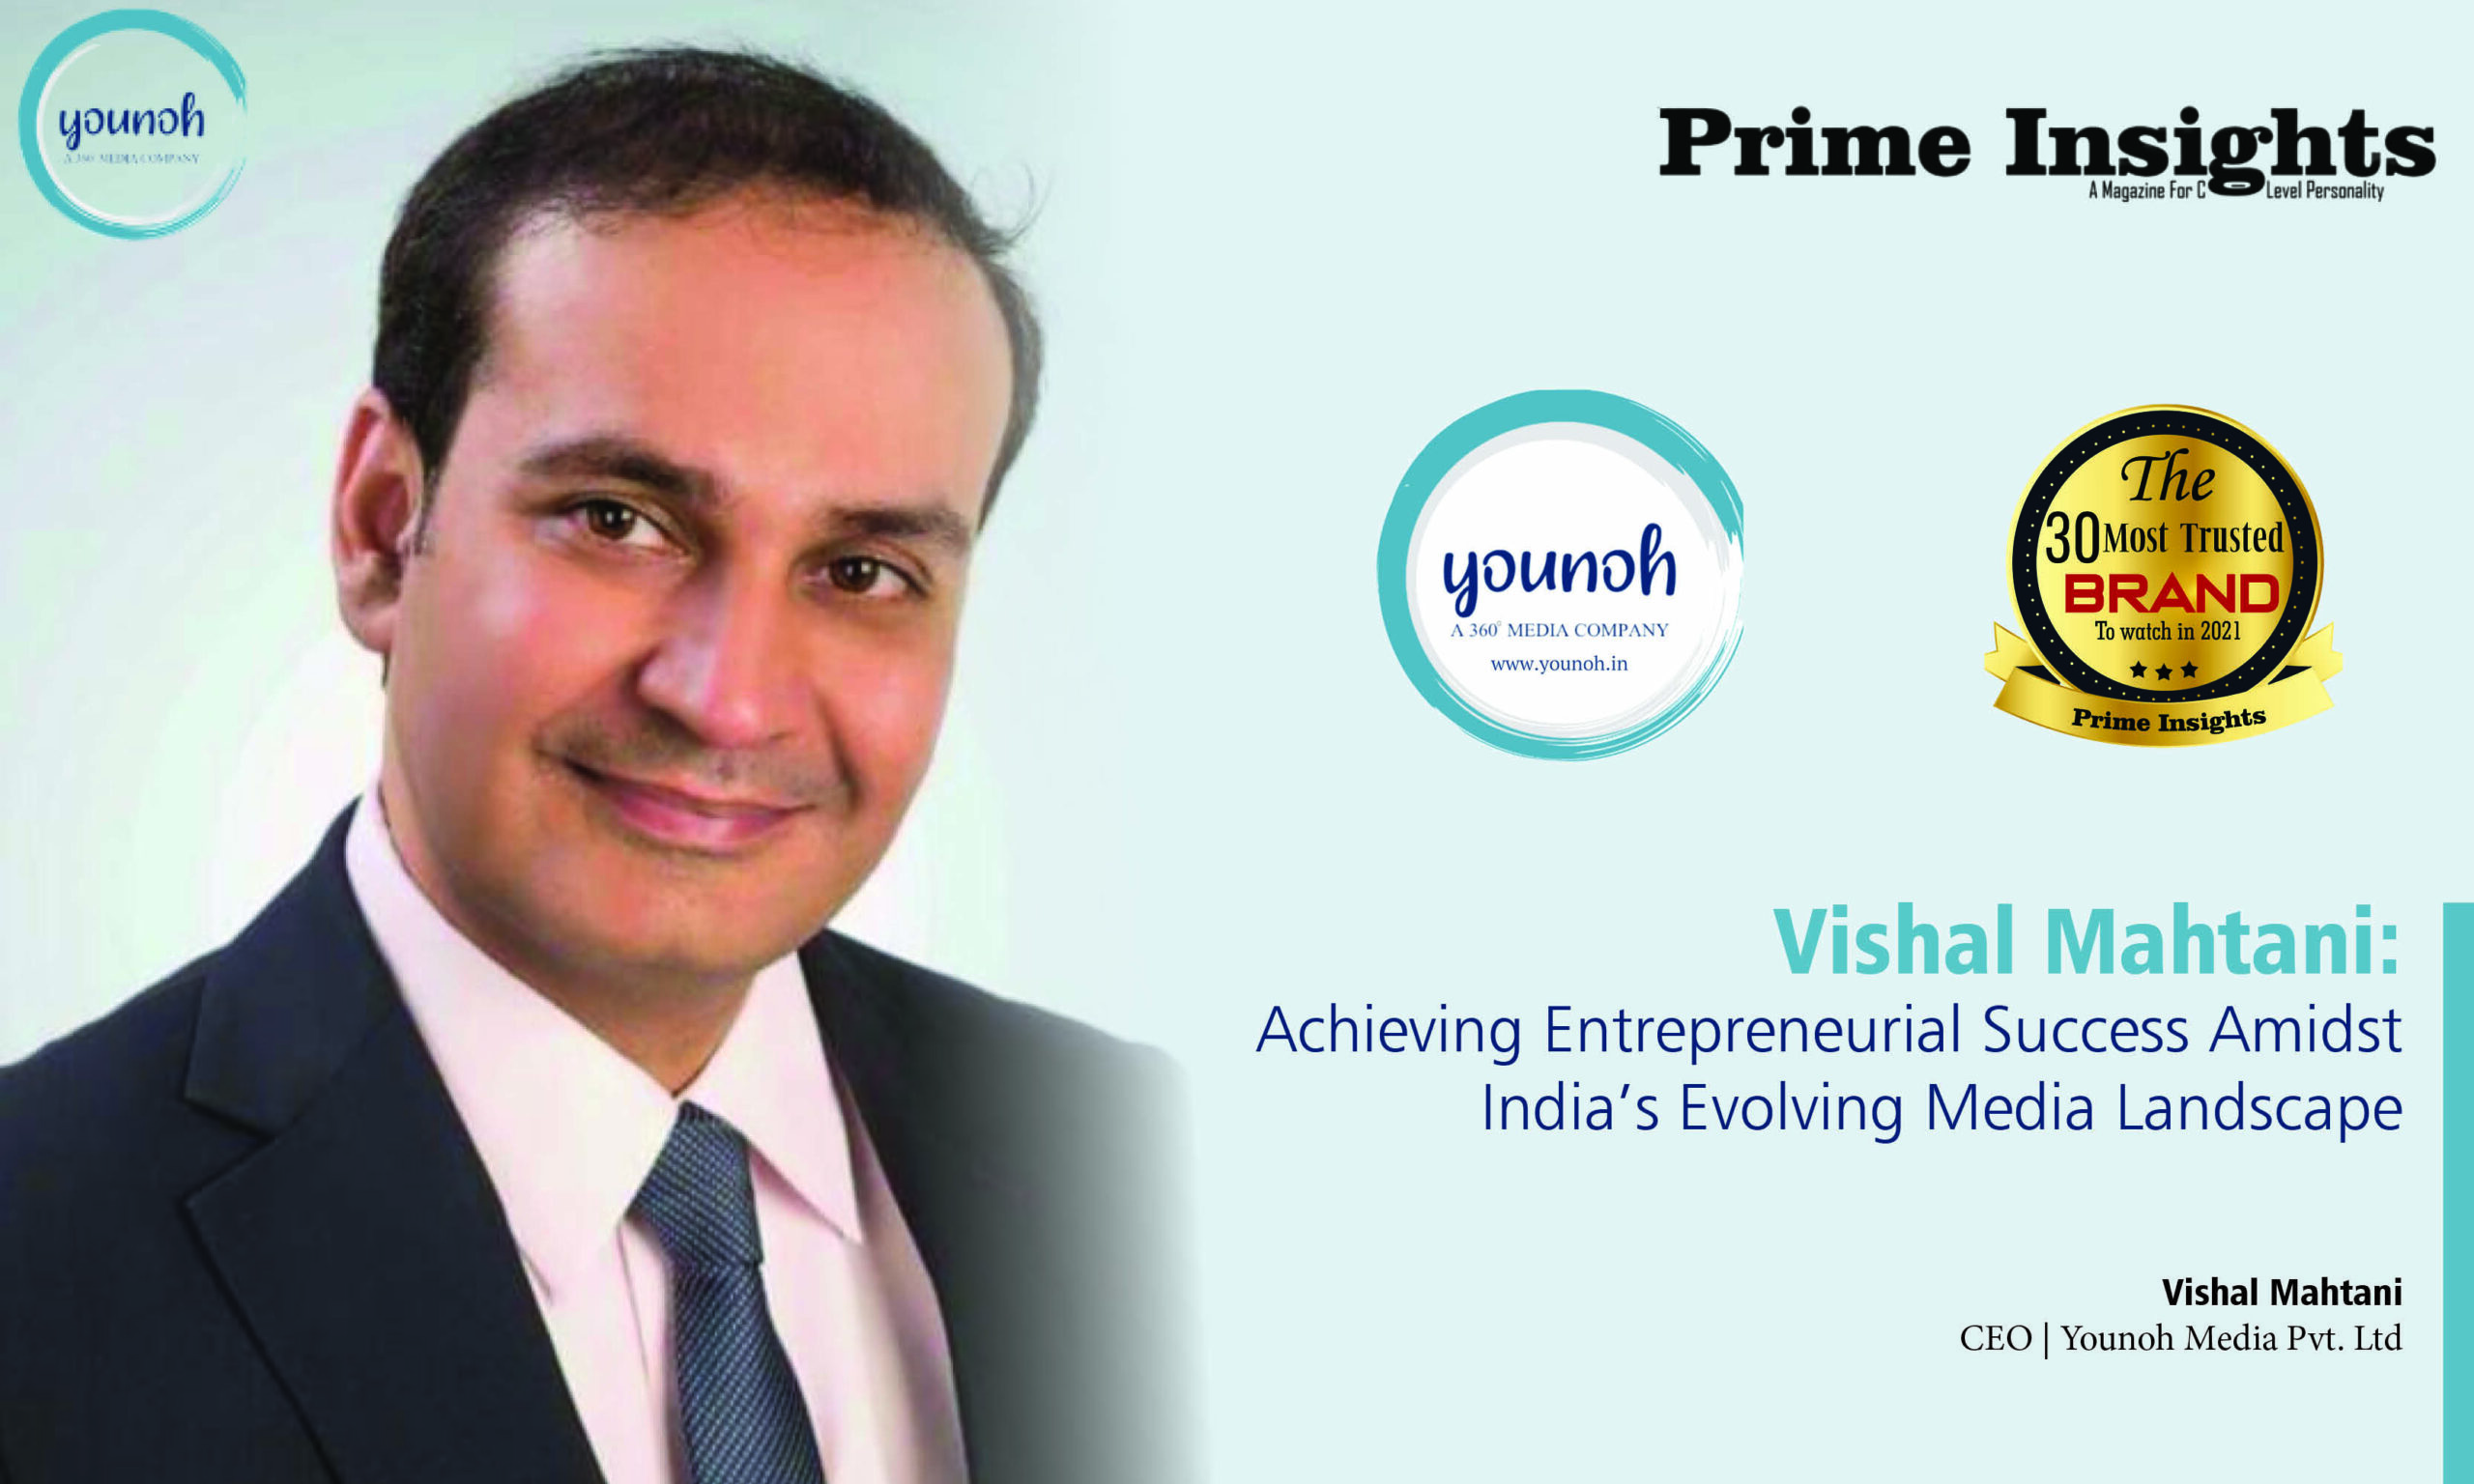 Vishal Mahtani: Achieving Entrepreneurial Success Amidst India’s Evolving Media Landscape